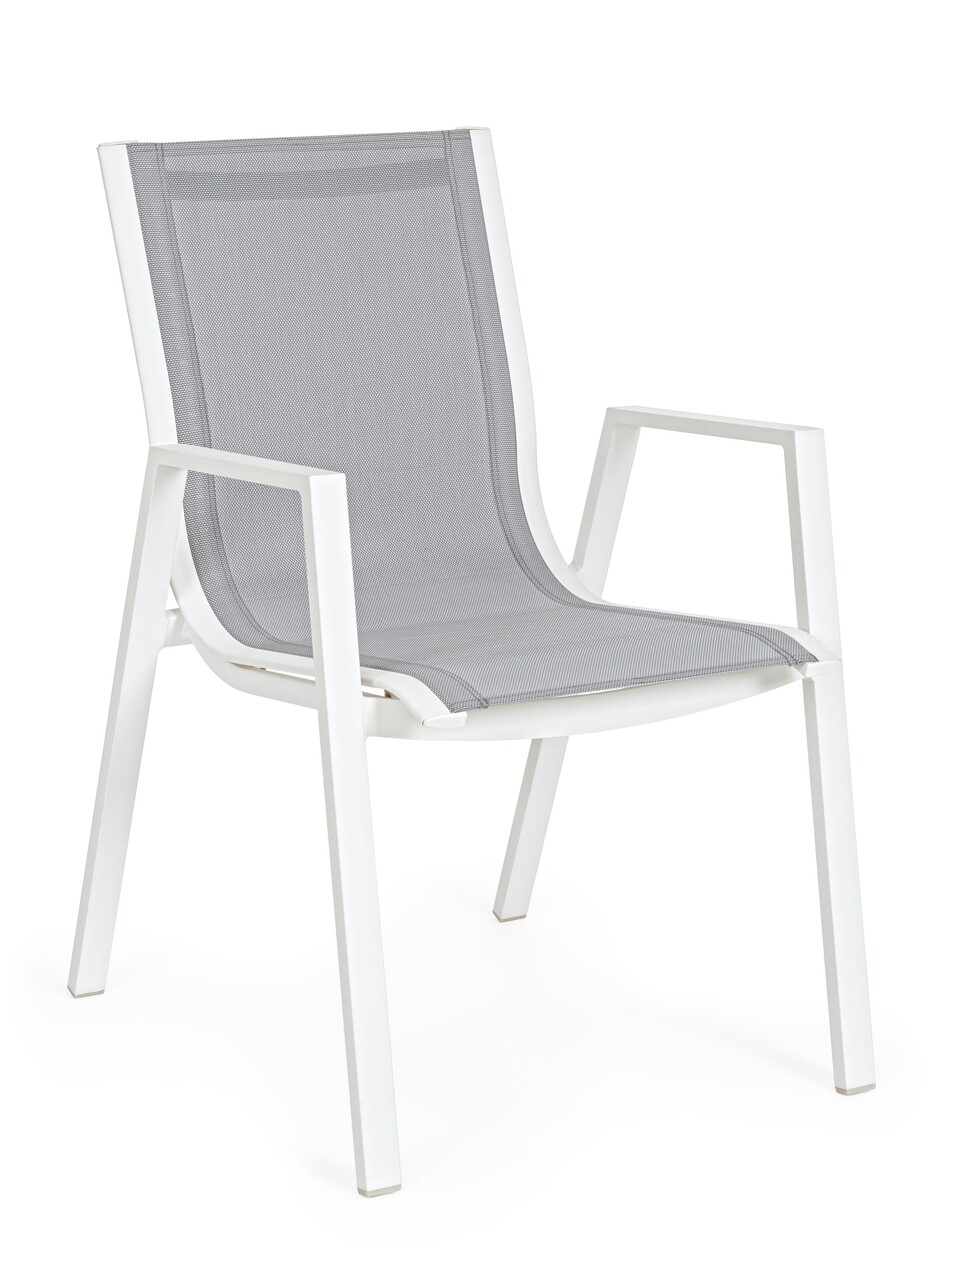 Pelagius kerti szék, bizzotto, 55x65.5x88 cm, alumínium/textil, fehér